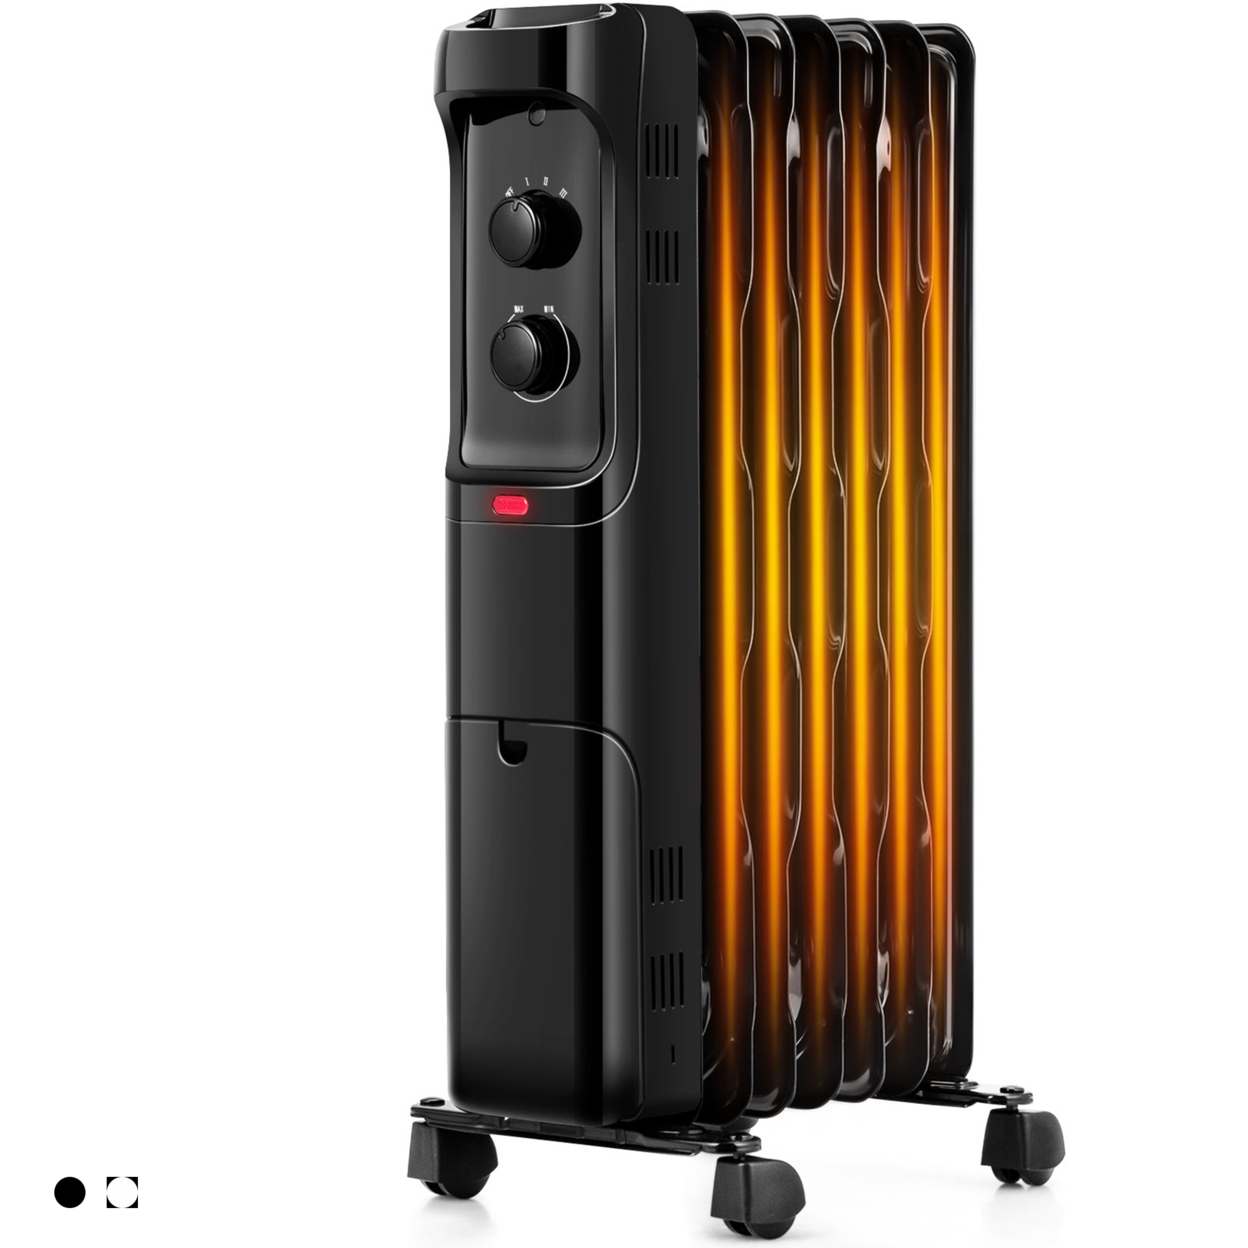 1500W Oil Filled Radiator Heater Space Heater W/ 3 Heat Settings Black/White - Black